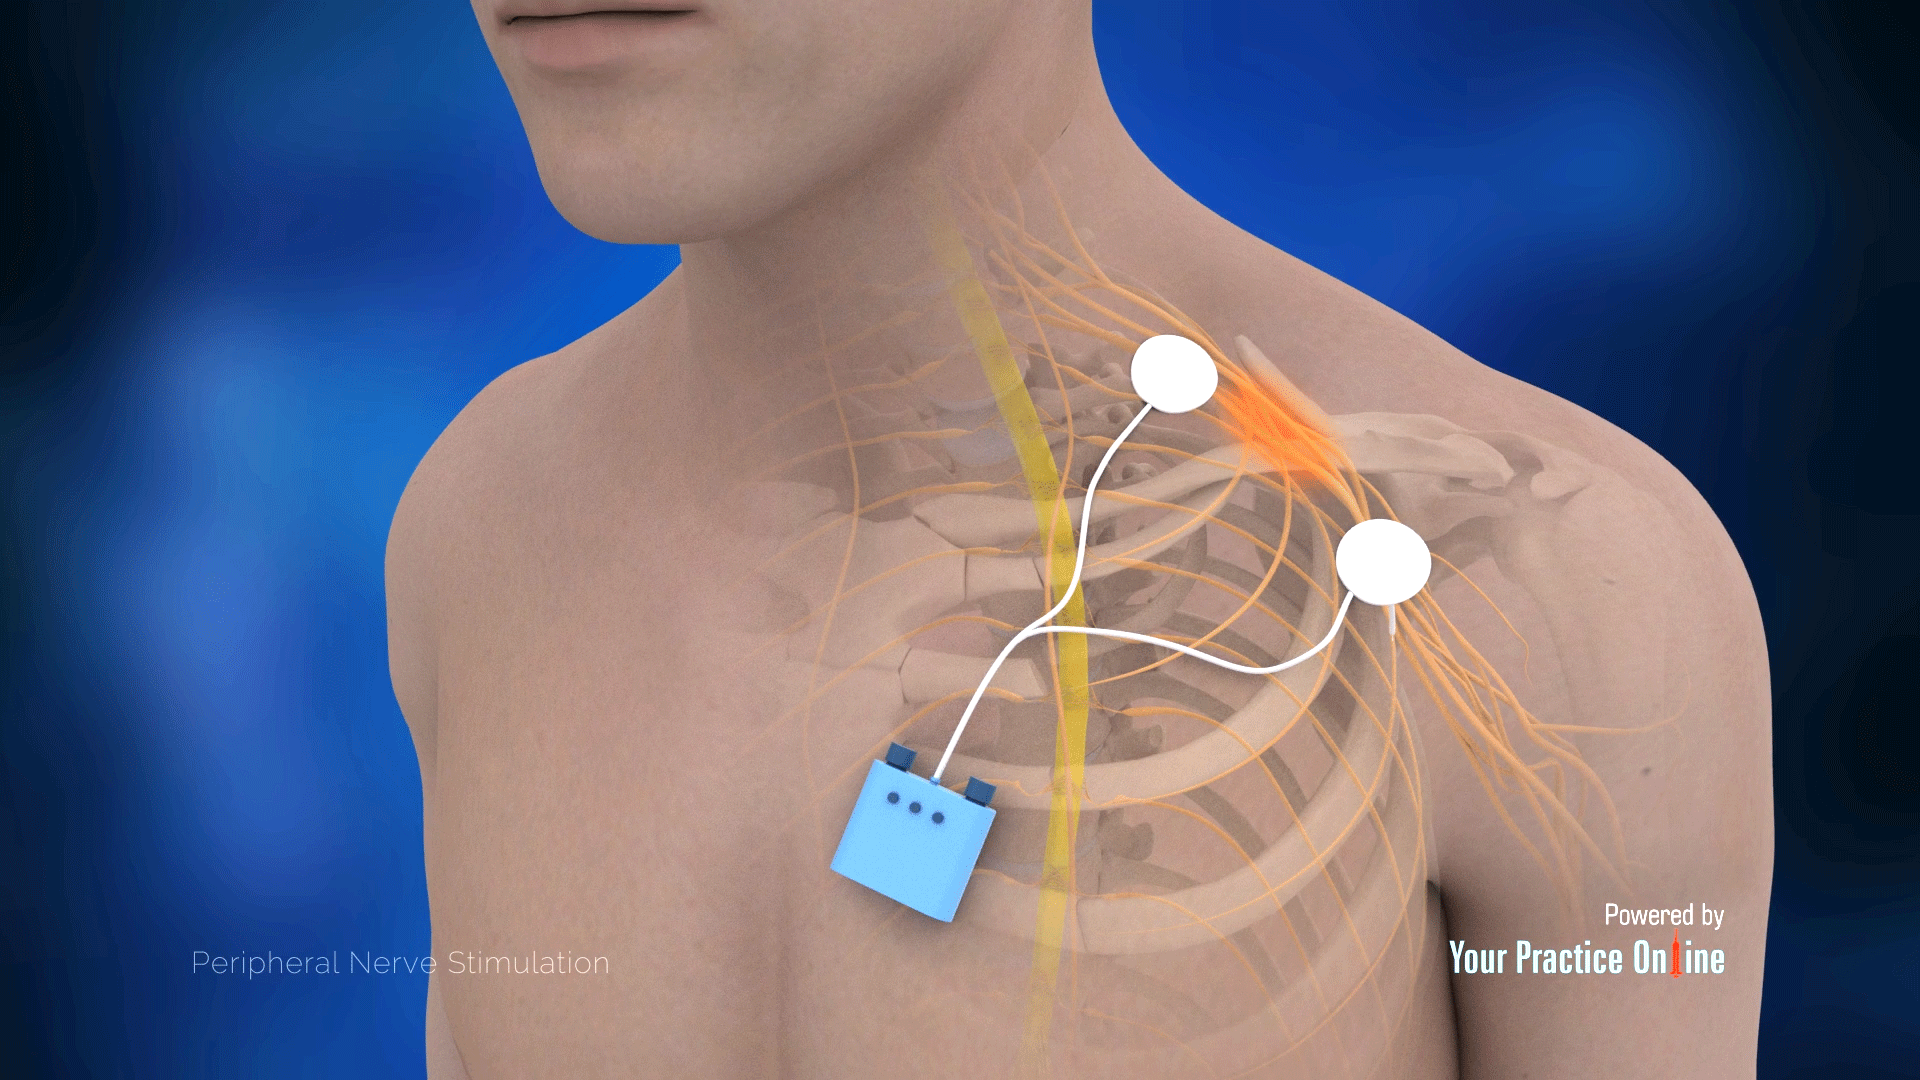 Nerve Stimulation Devices for Chronic Pain